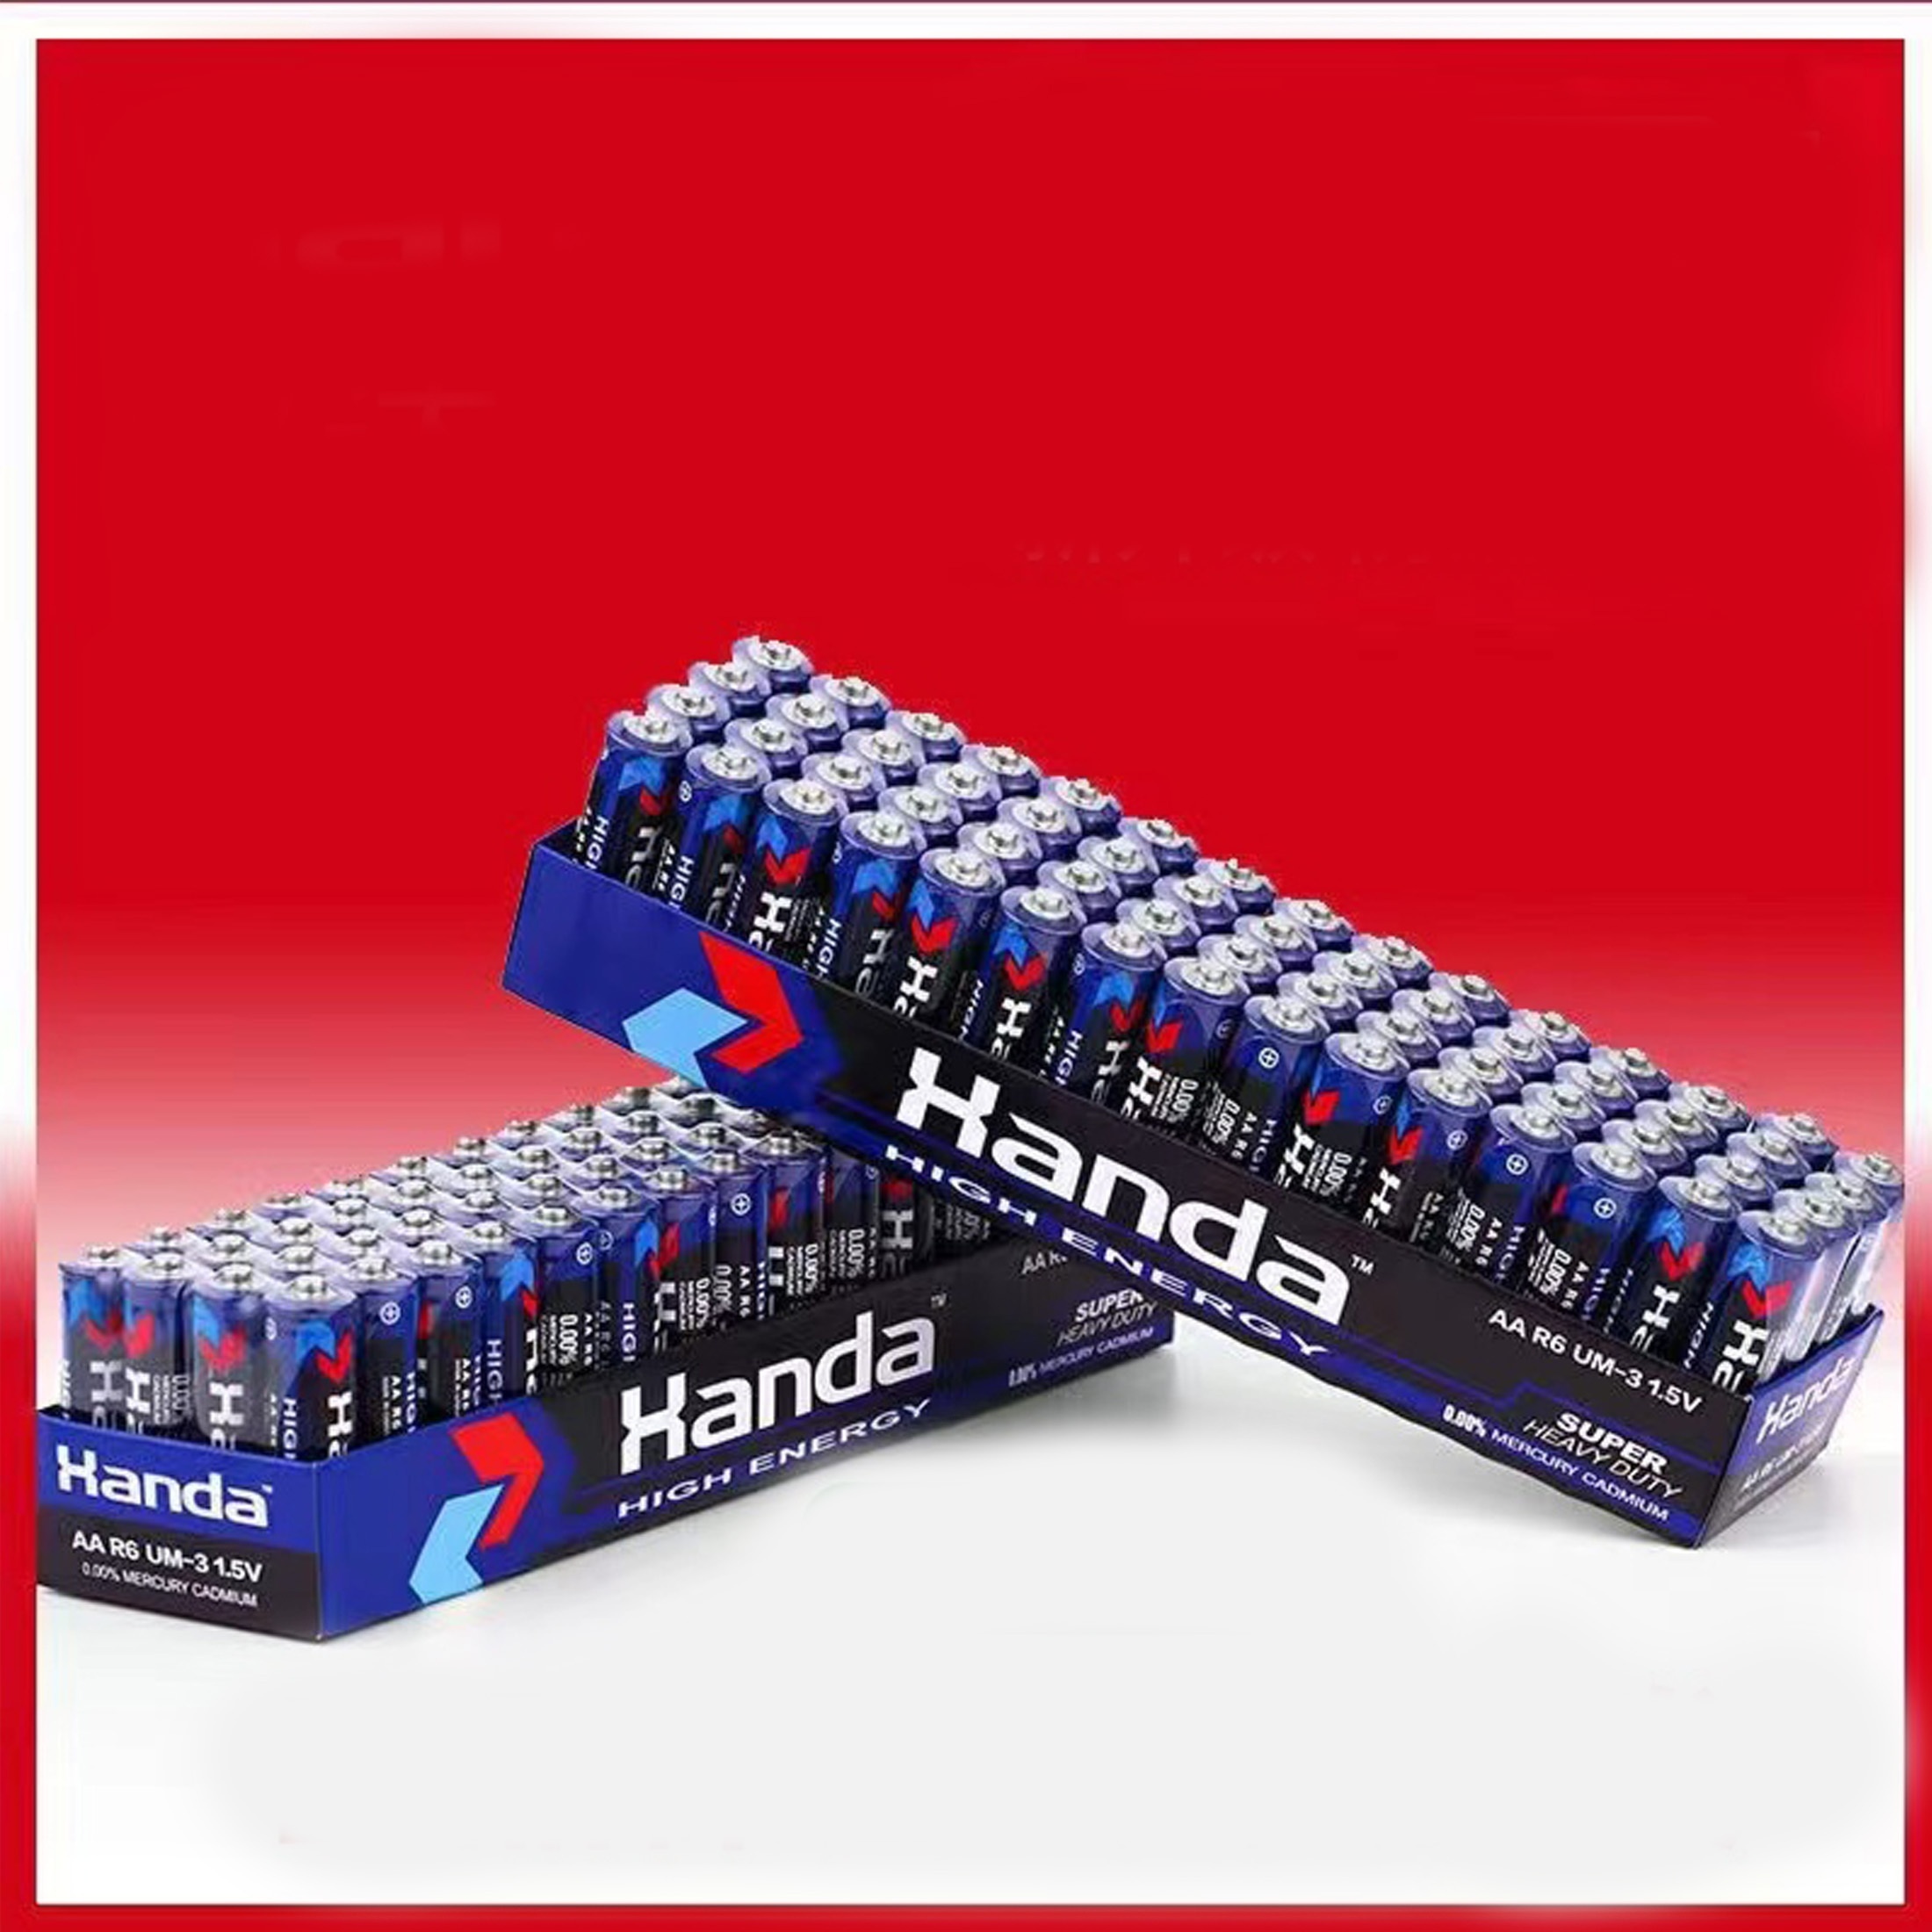 

60pcs Premium Grade Aaa Batteries - Alkaline Triple A Battery - Ultra Long-lasting, Leakproof 1.5v Batteries